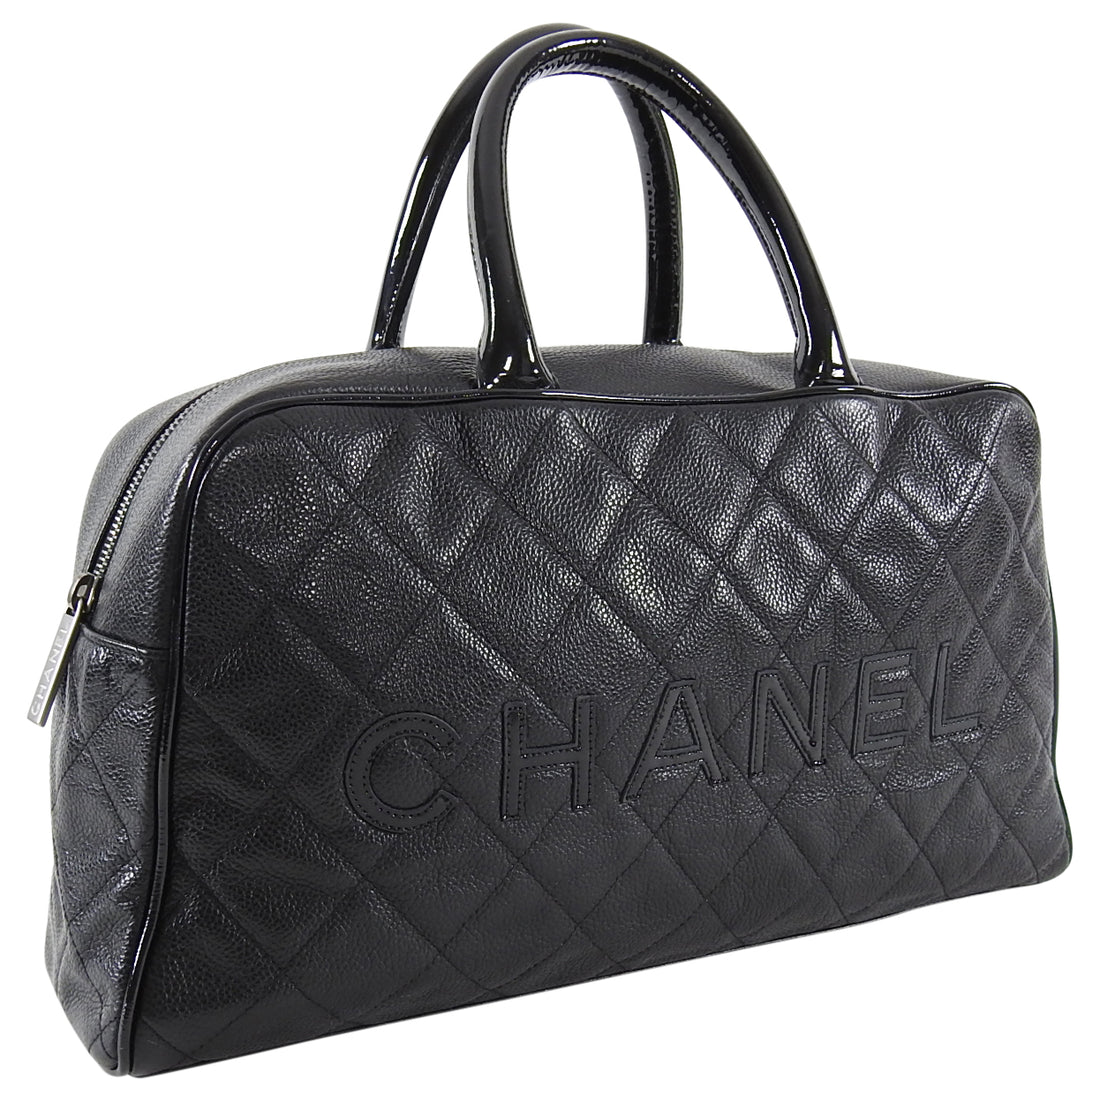 Chanel Caviar Deauville Bowling Bag